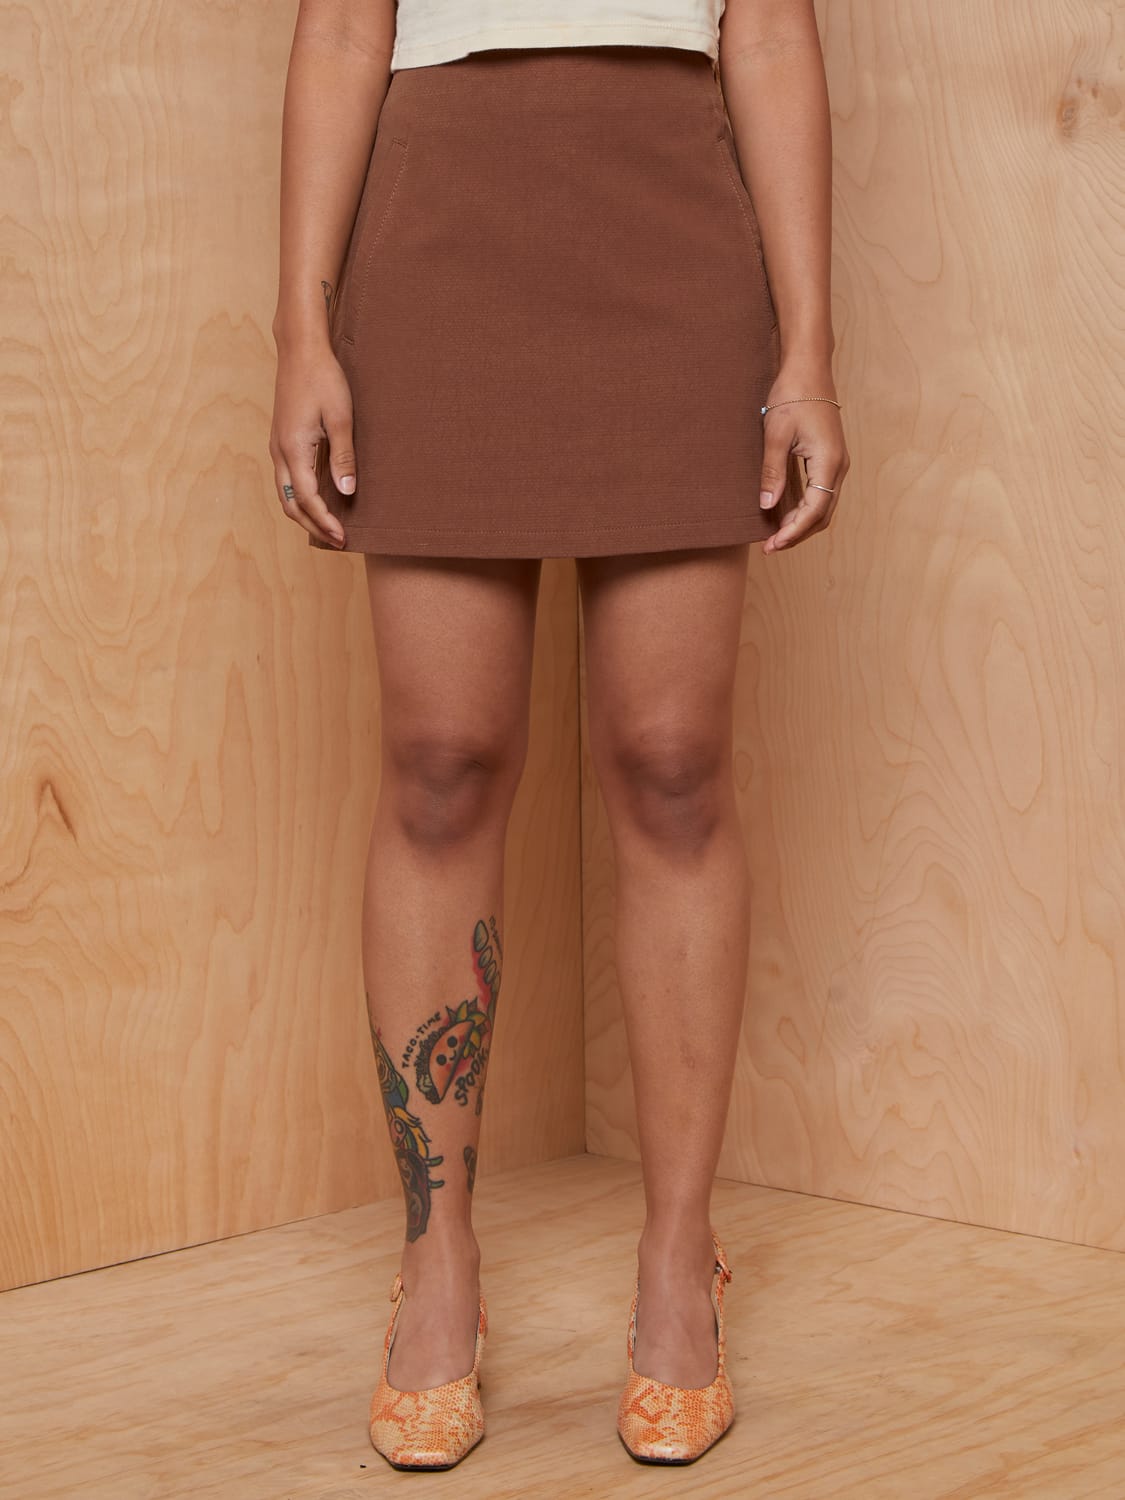 Incu Collection Brown Skirt/Jacket Set